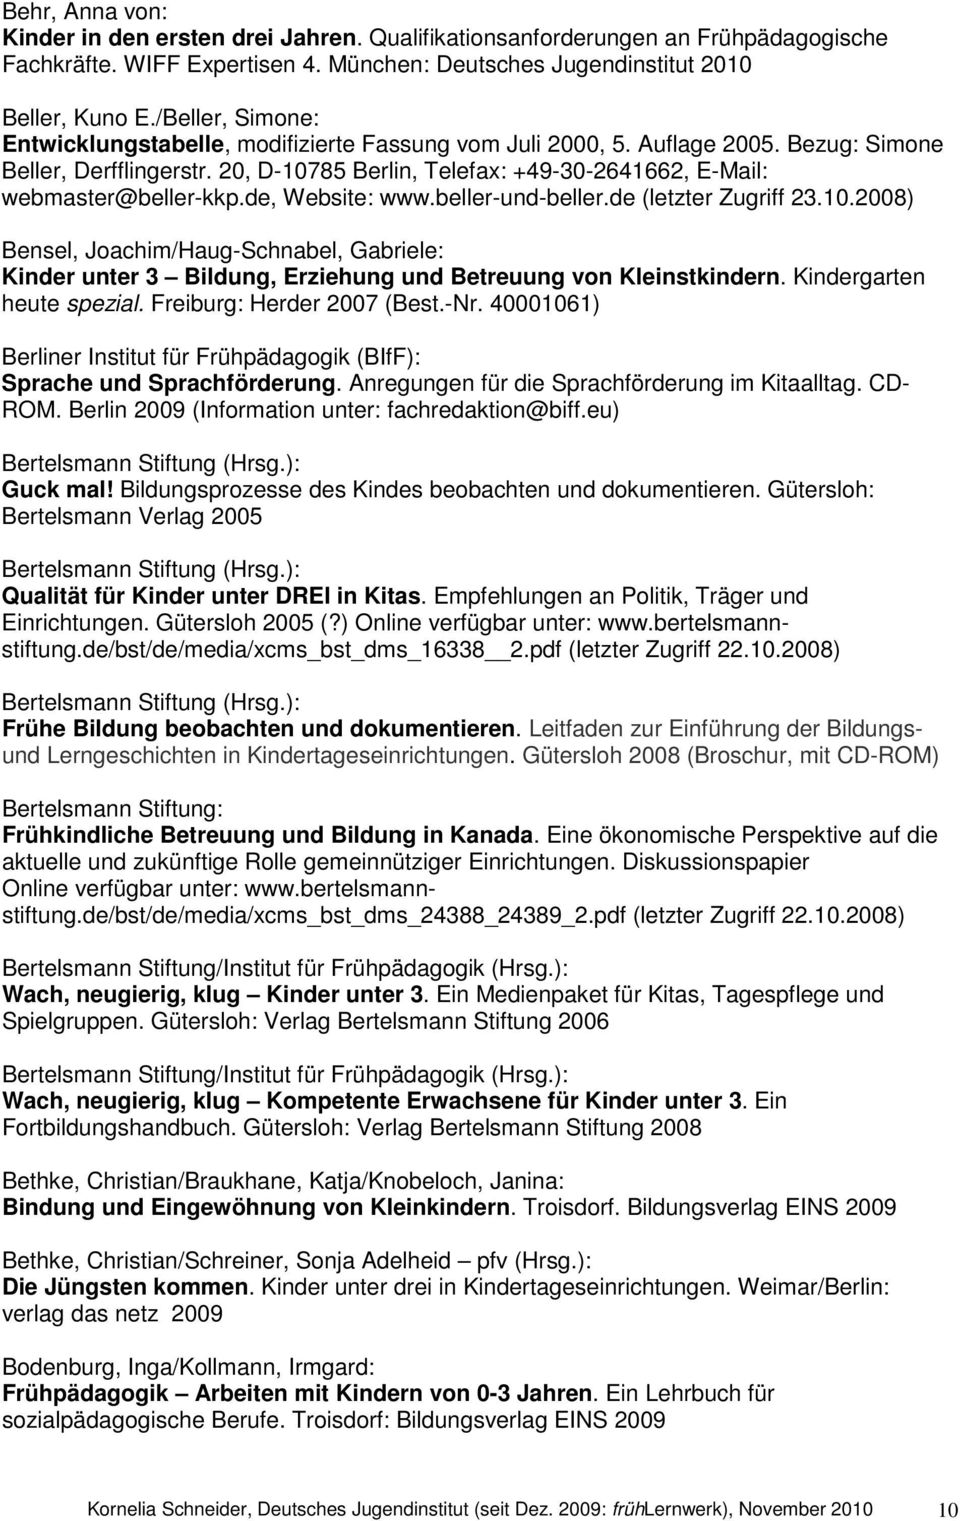 20, D-10785 Berlin, Telefax: +49-30-2641662, E-Mail: webmaster@beller-kkp.de, Website: www.beller-und-beller.de (letzter Zugriff 23.10.2008) Bensel, Joachim/Haug-Schnabel, Gabriele: Kinder unter 3 Bildung, Erziehung und Betreuung von Kleinstkindern.